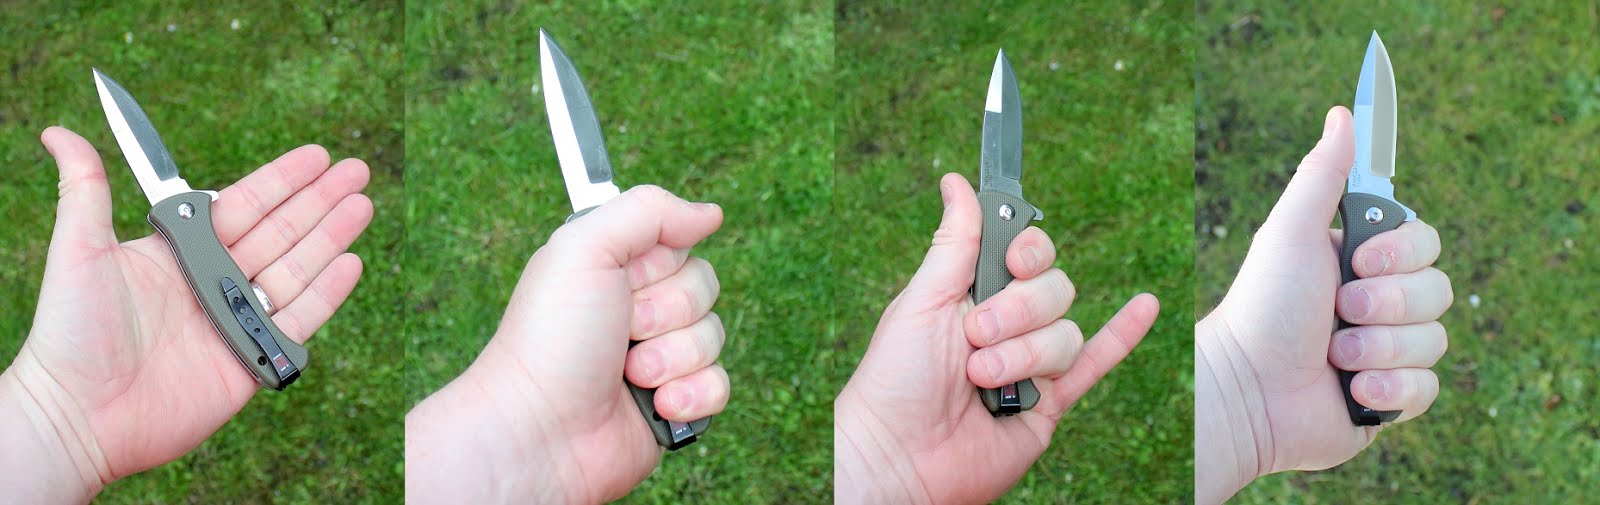 S.E.R.E. 2020™ Straight-Edge Blade Folding Knife 3.6 - Olive Drab